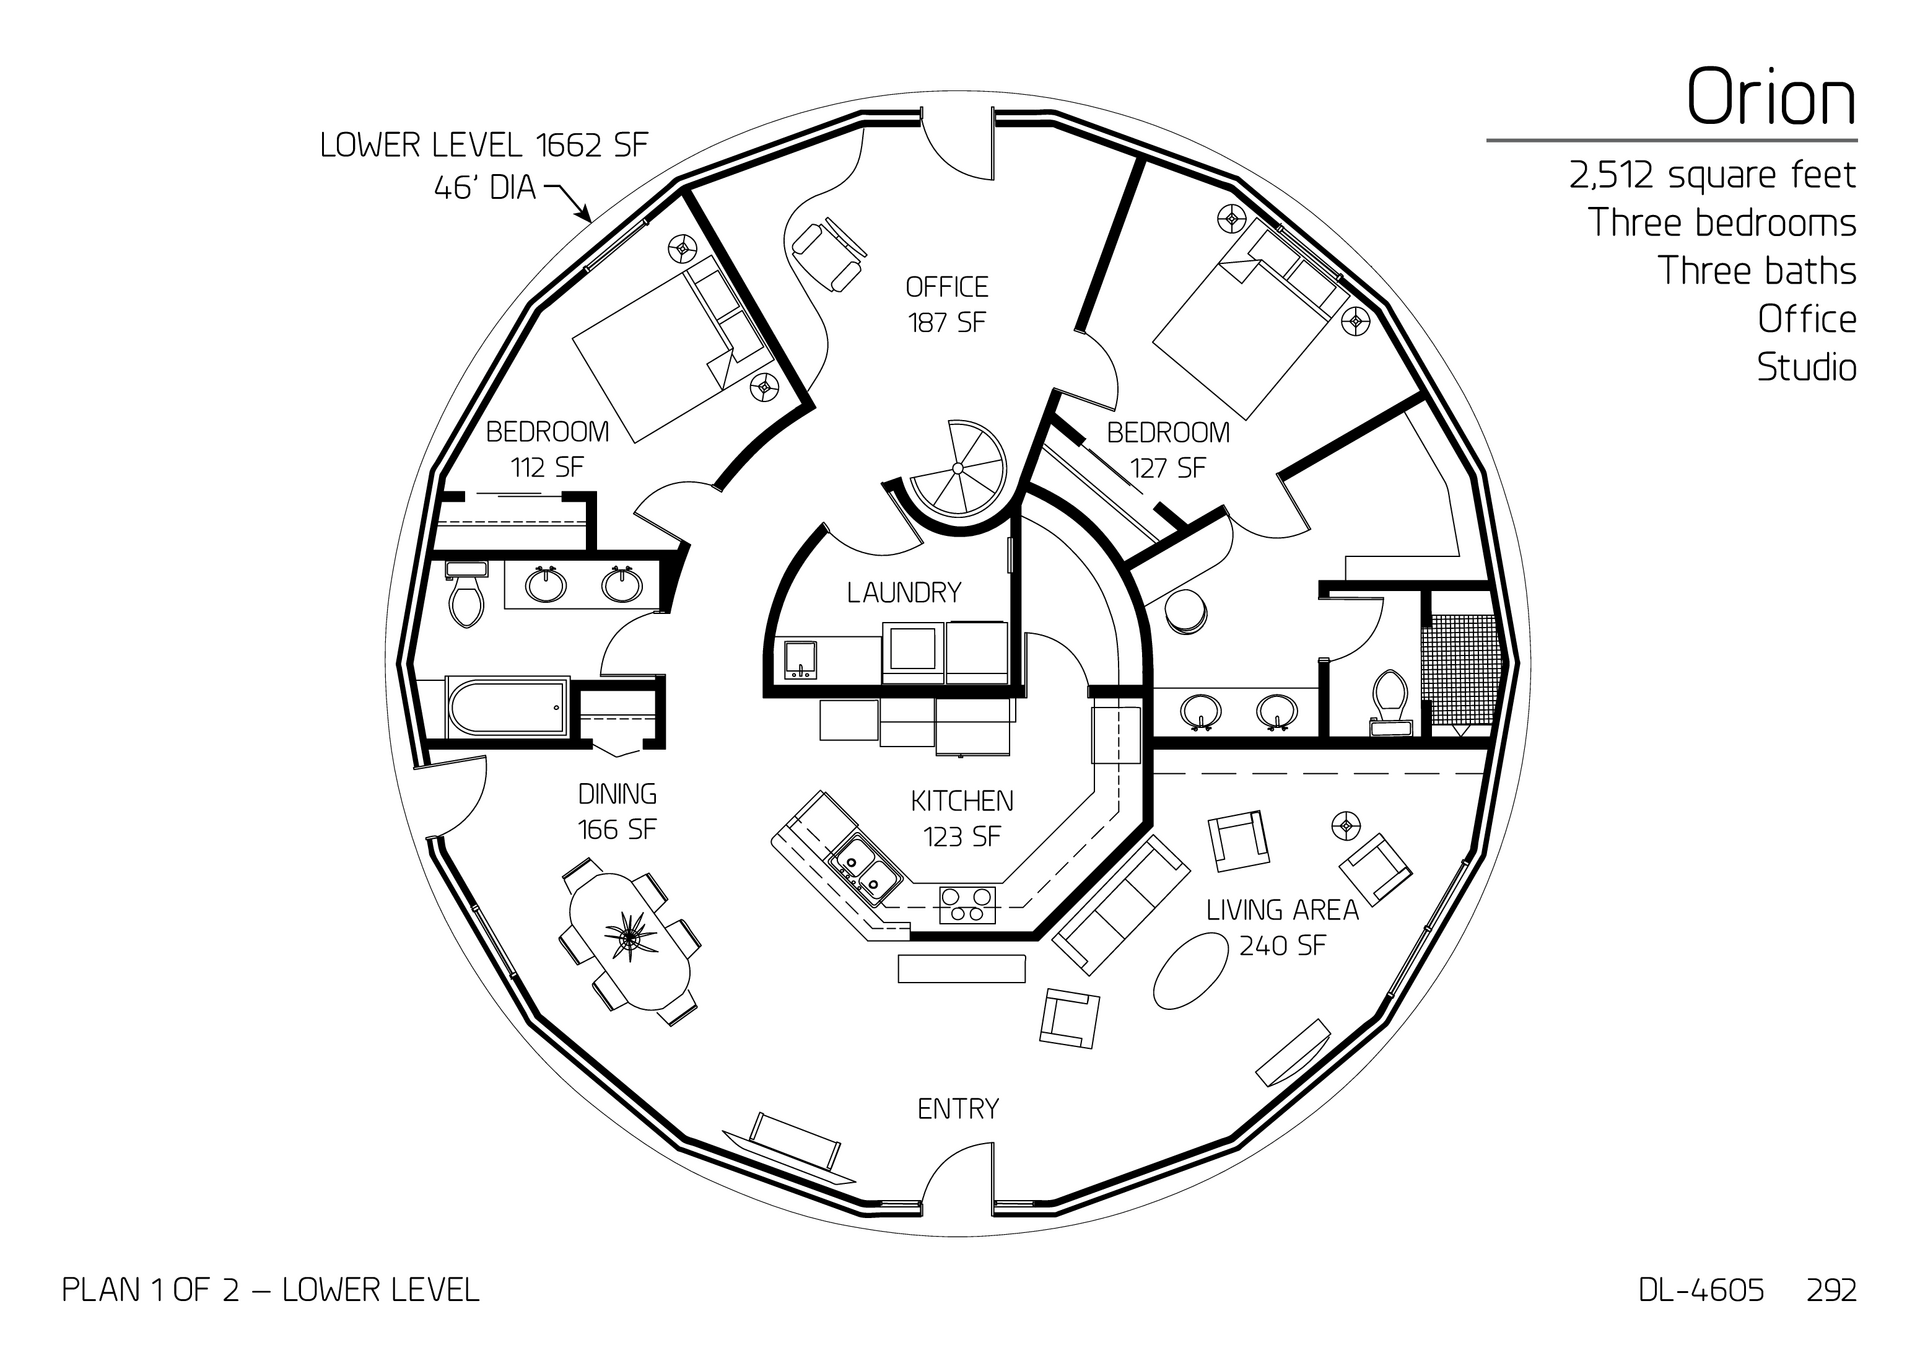 Orion: Main Floor of a 46' diameter, 2,512 SF, Three-Bedroom, Three-Bath Floor Plan.